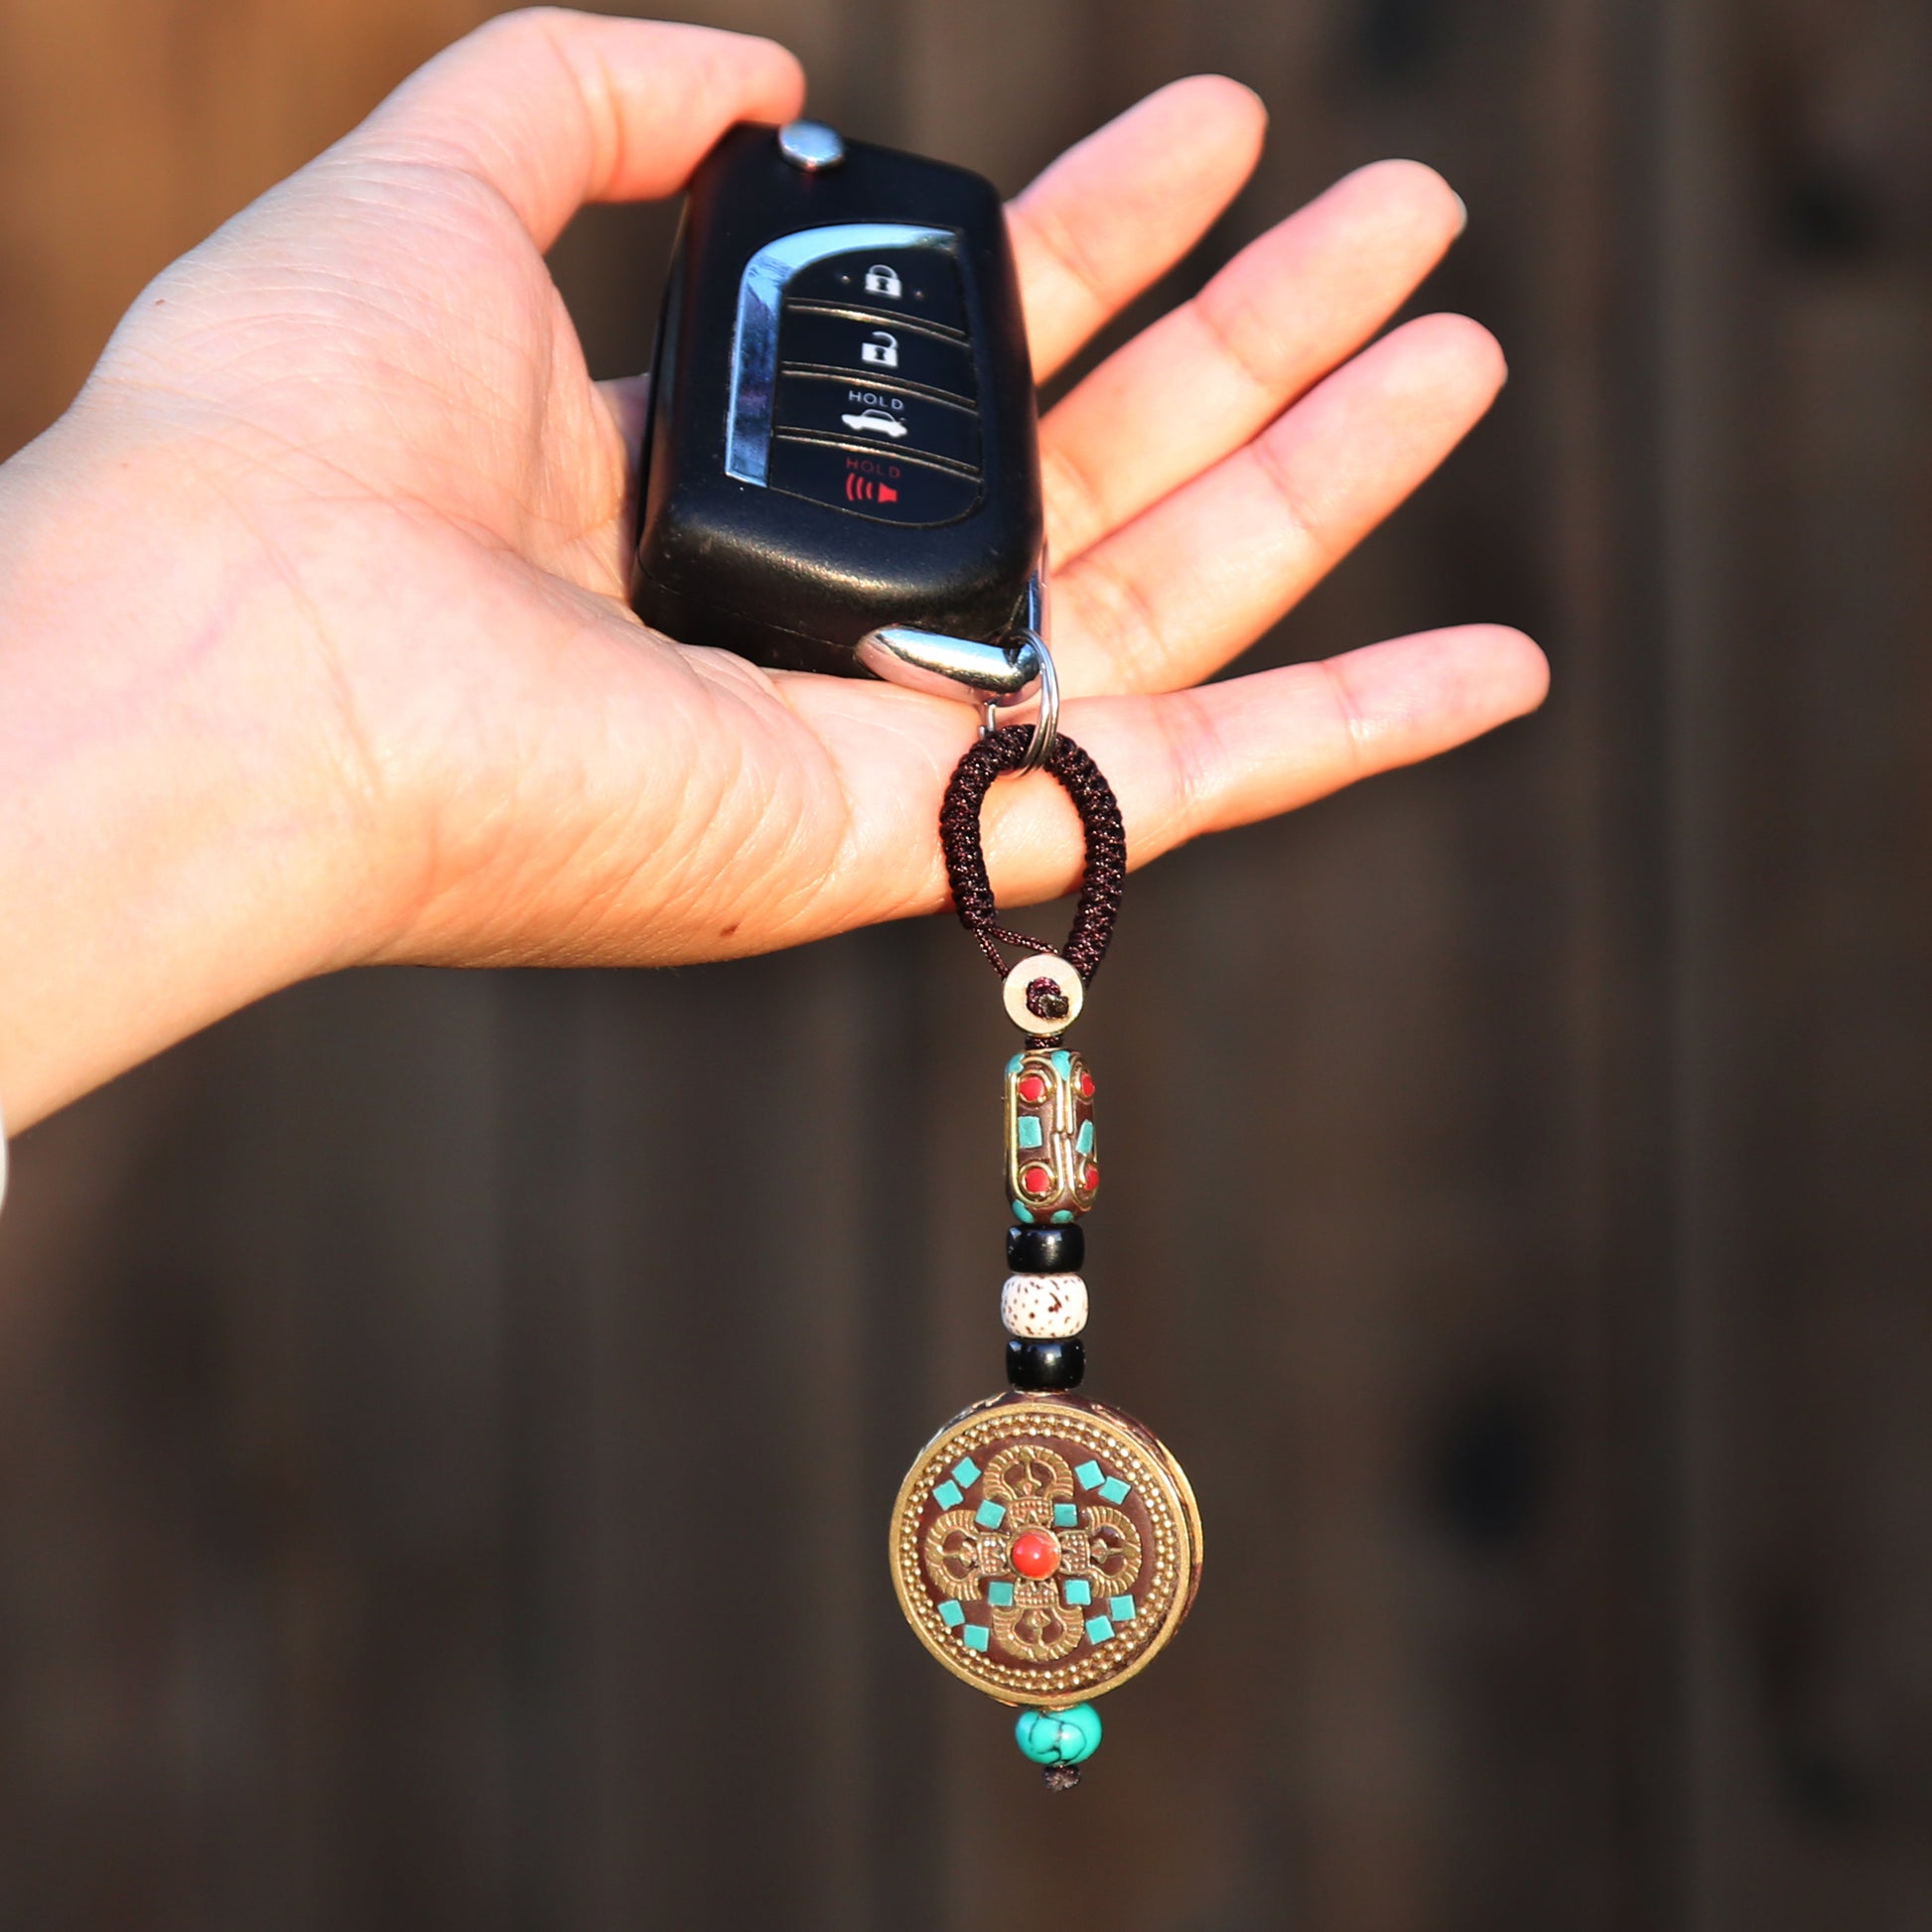 Buddha Keychain Yoga Accessories Bag Accessory Keychain Gold Keychain  Tibetan Buddha Handmade Keychain car Accessories 